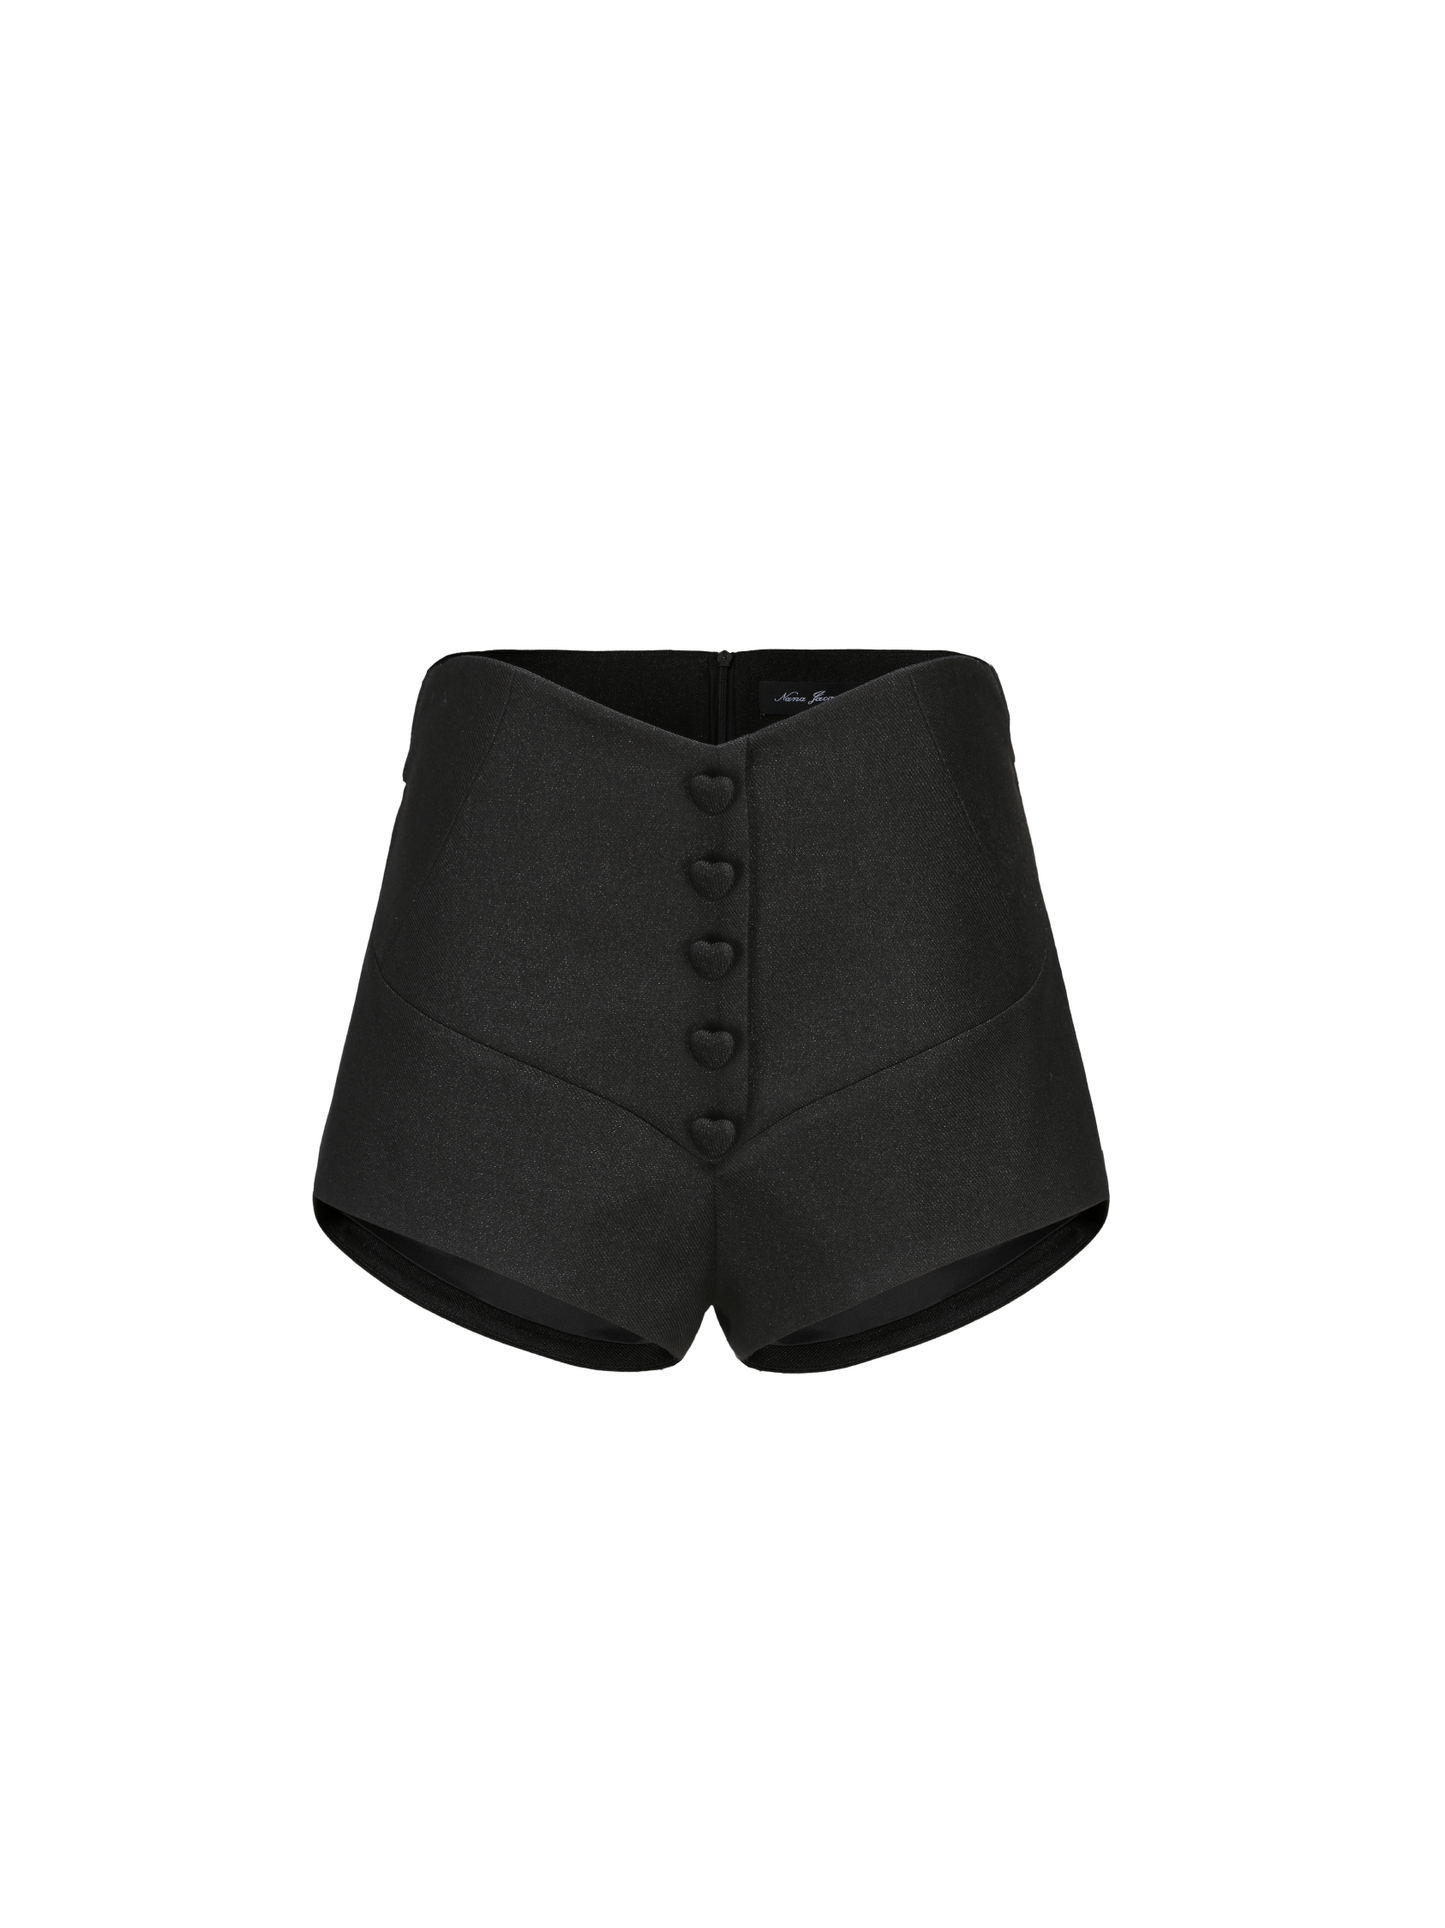 Annica Heart Shorts (Black) (Final Sale)